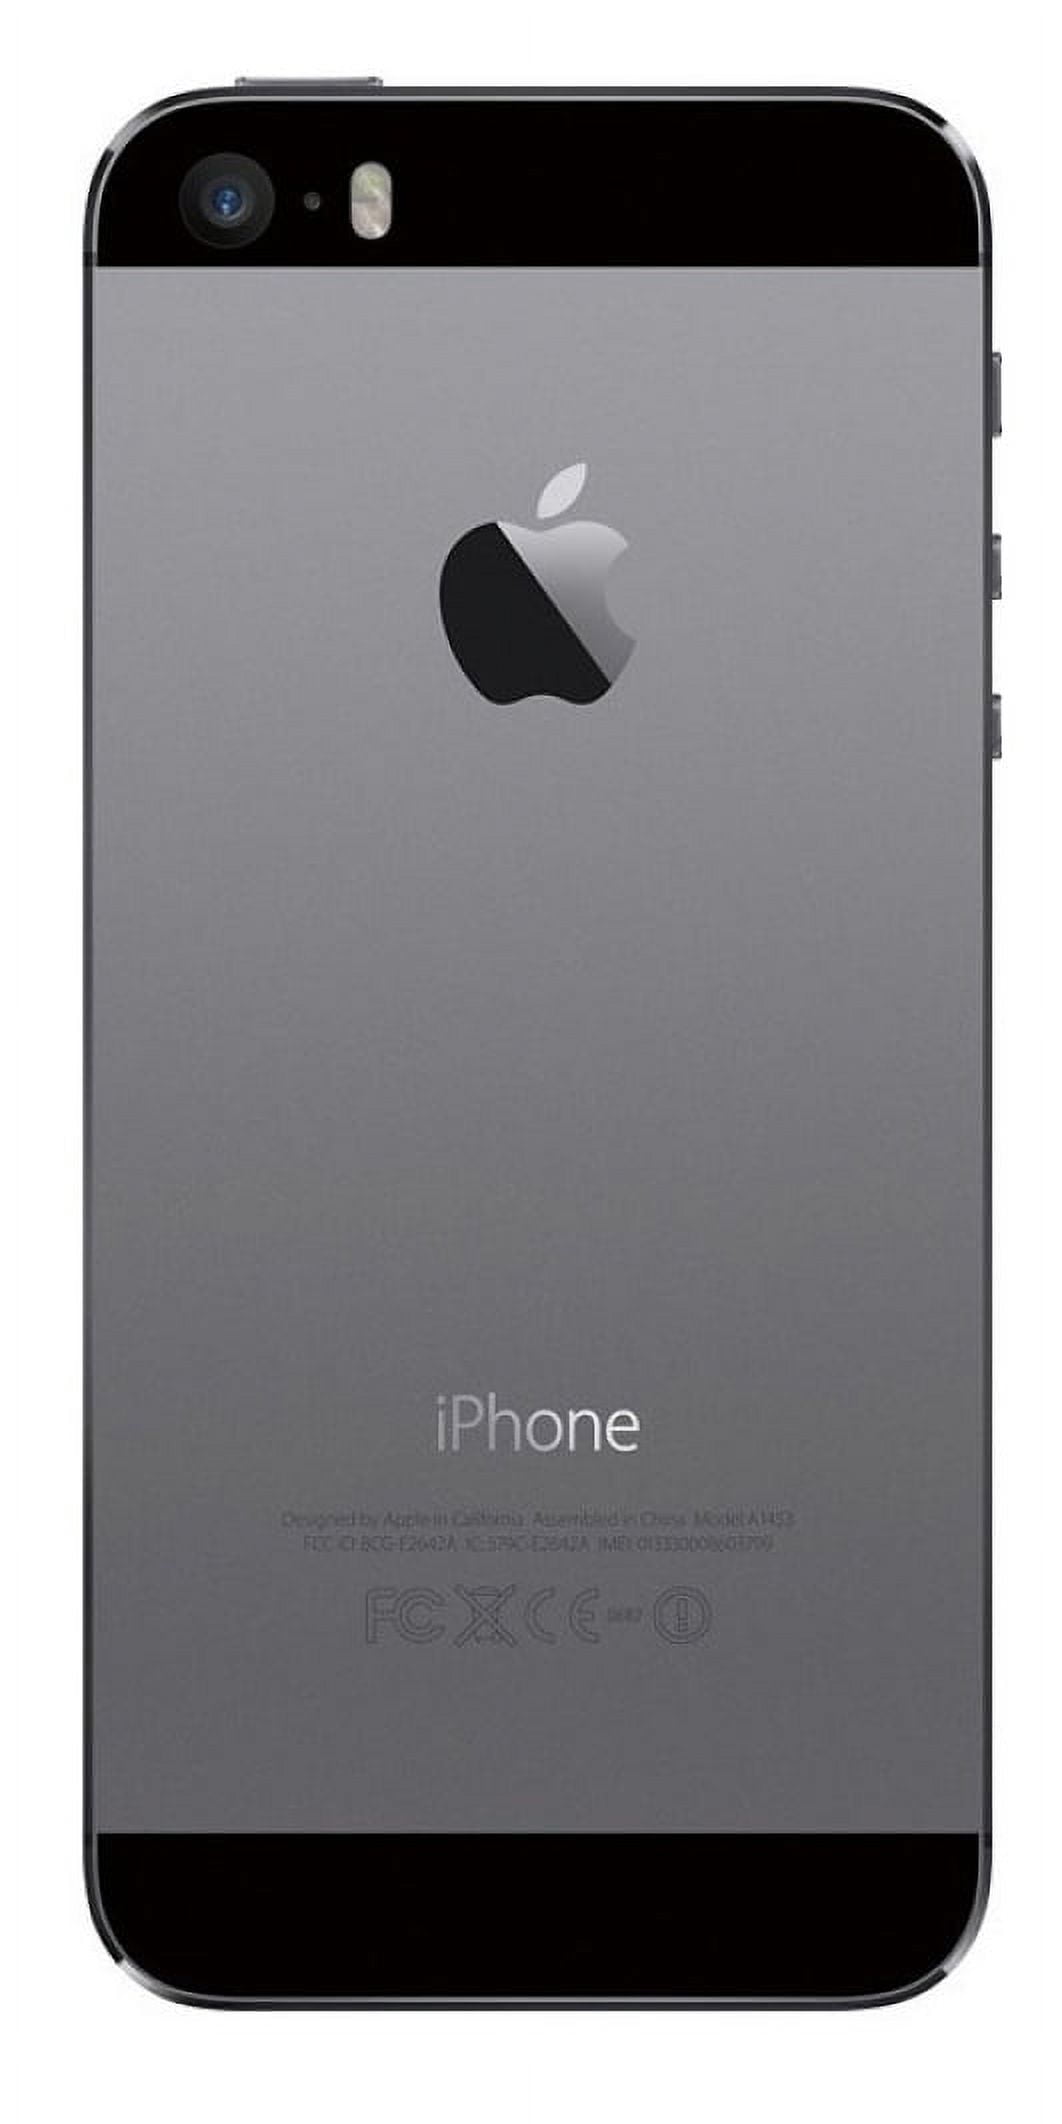 Refurbished Apple iPhone 6 16GB, Space Gray - Unlocked GSM 